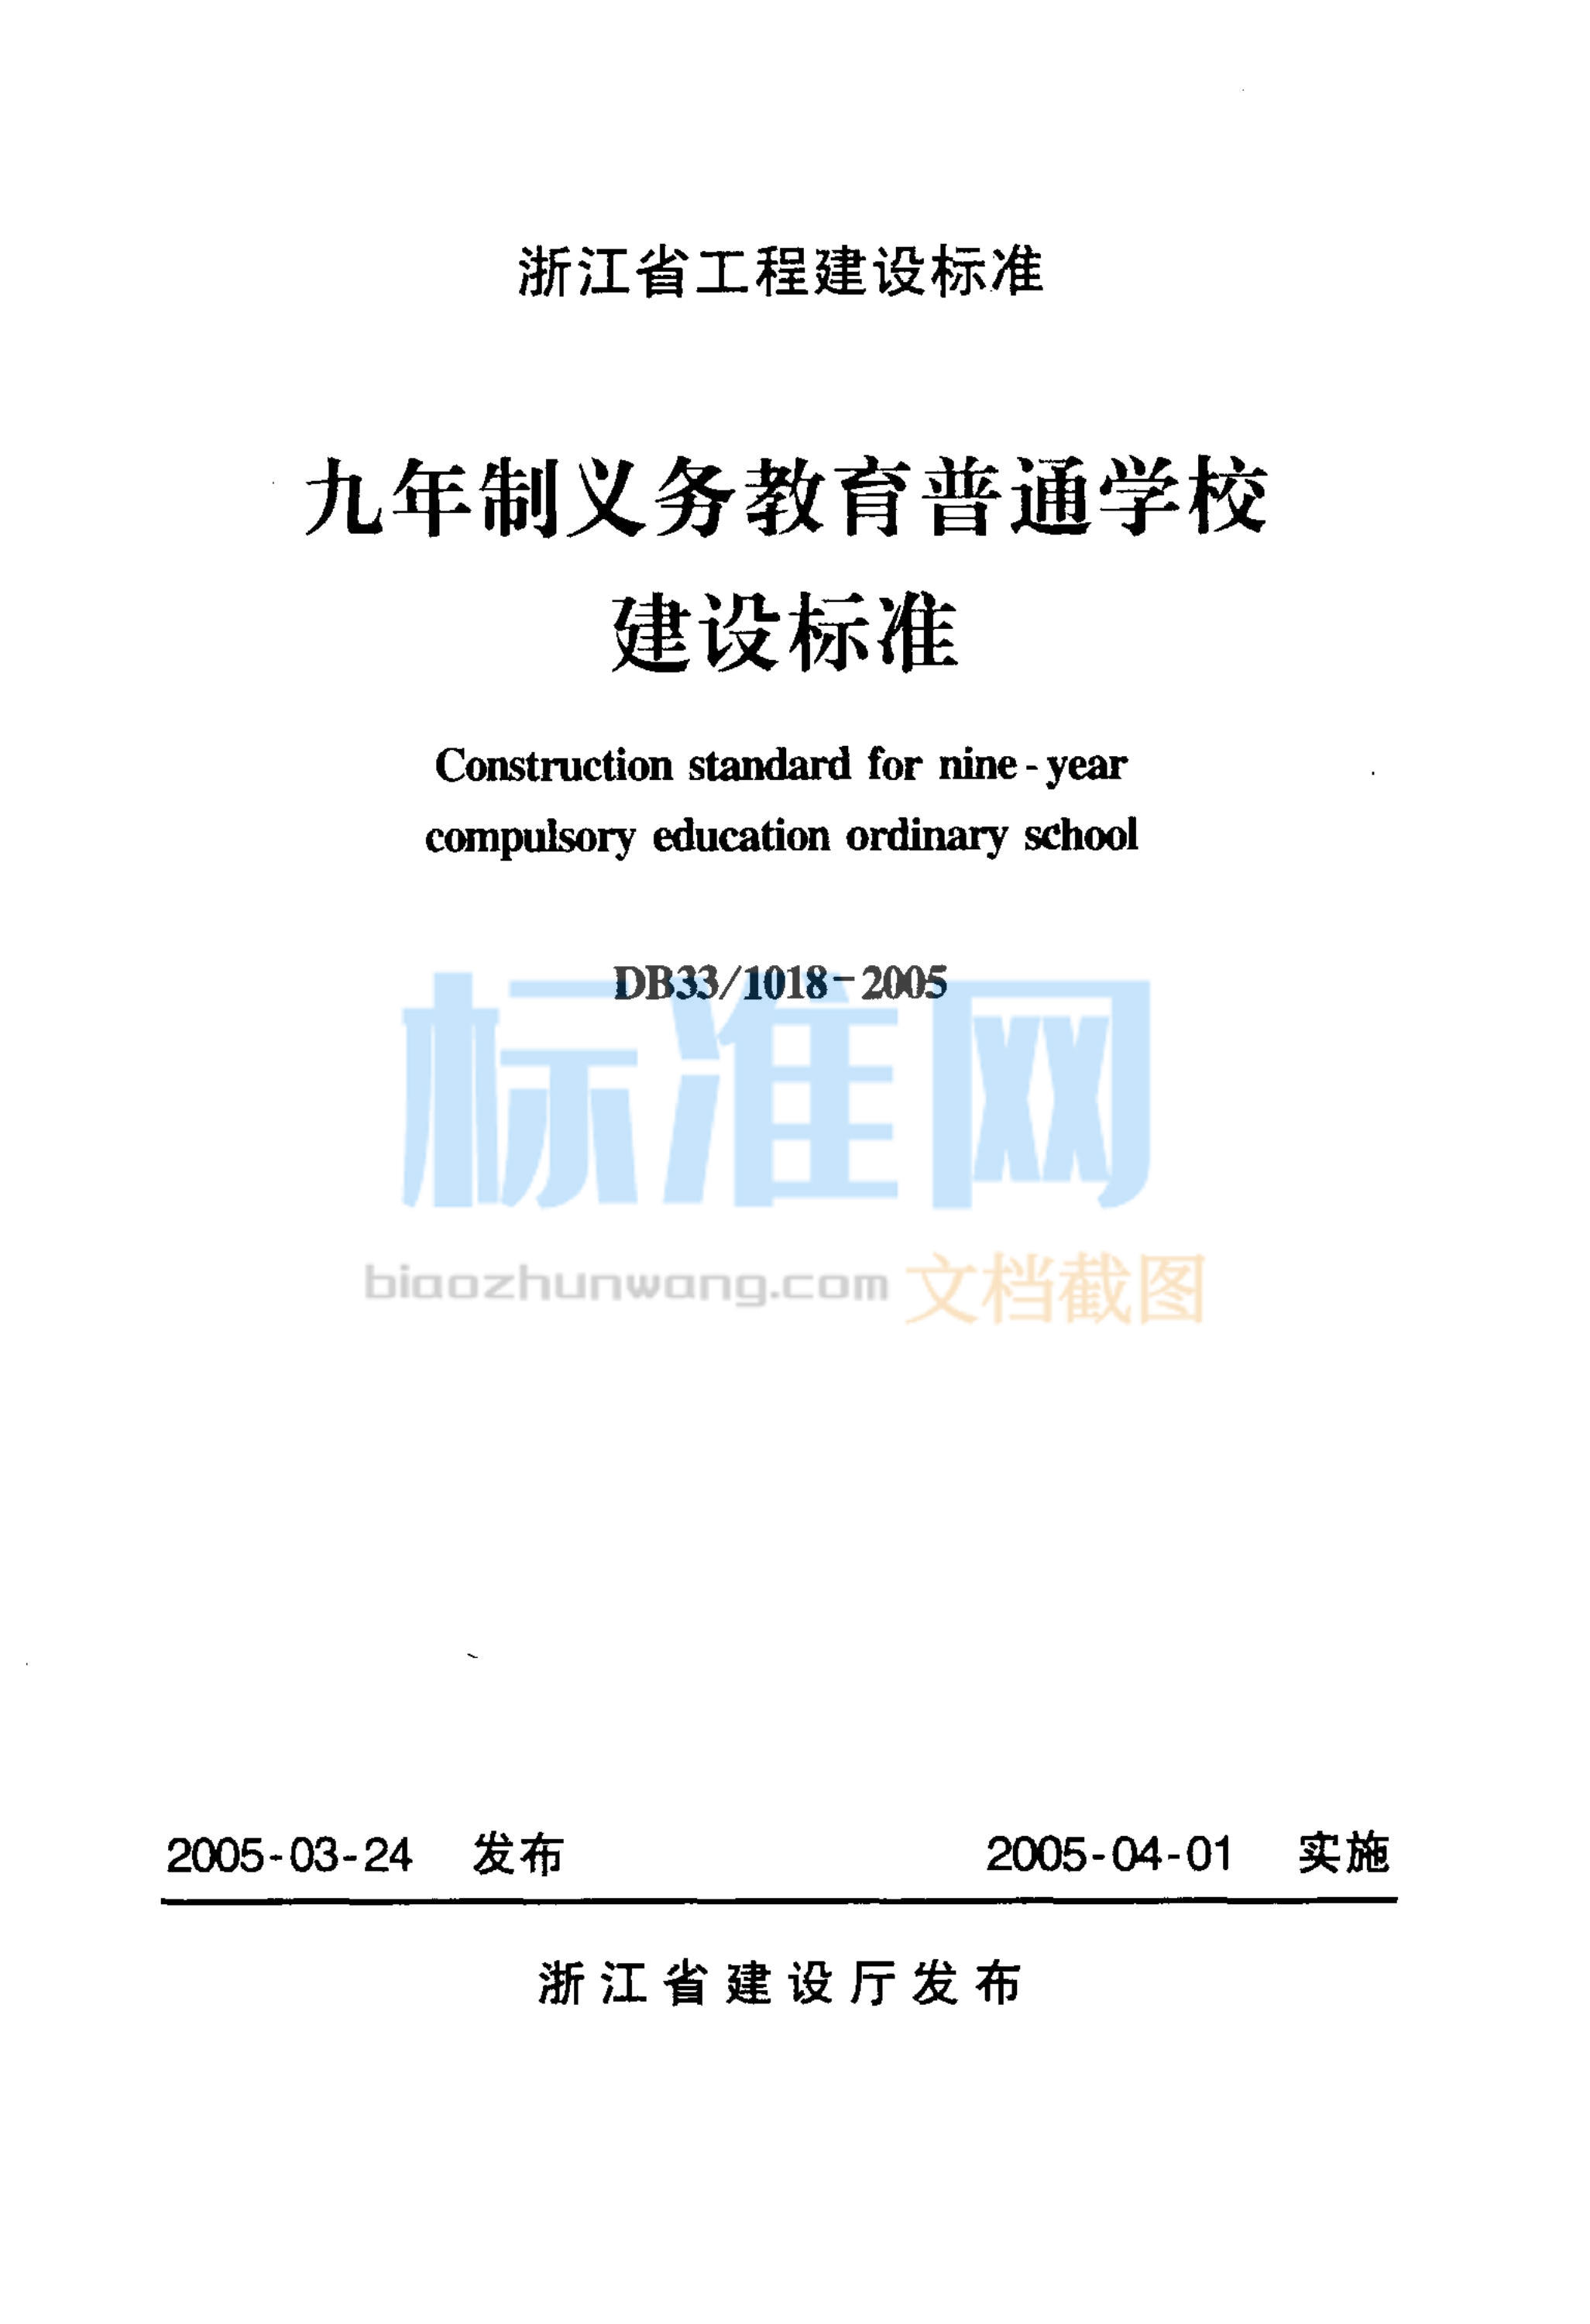 DB33/1018-2005 浙江省九年制义务教育普通学校建设标准